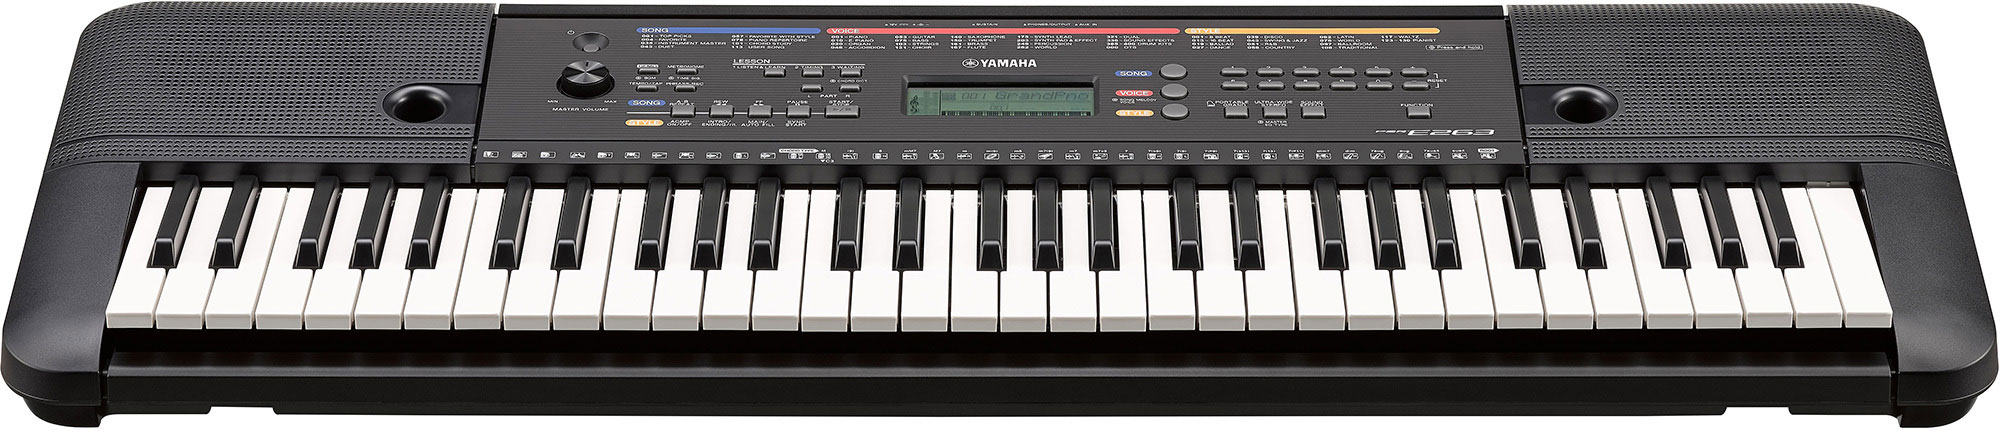 Yamaha Psr-e263 - - Entertainer Keyboard - Variation 1